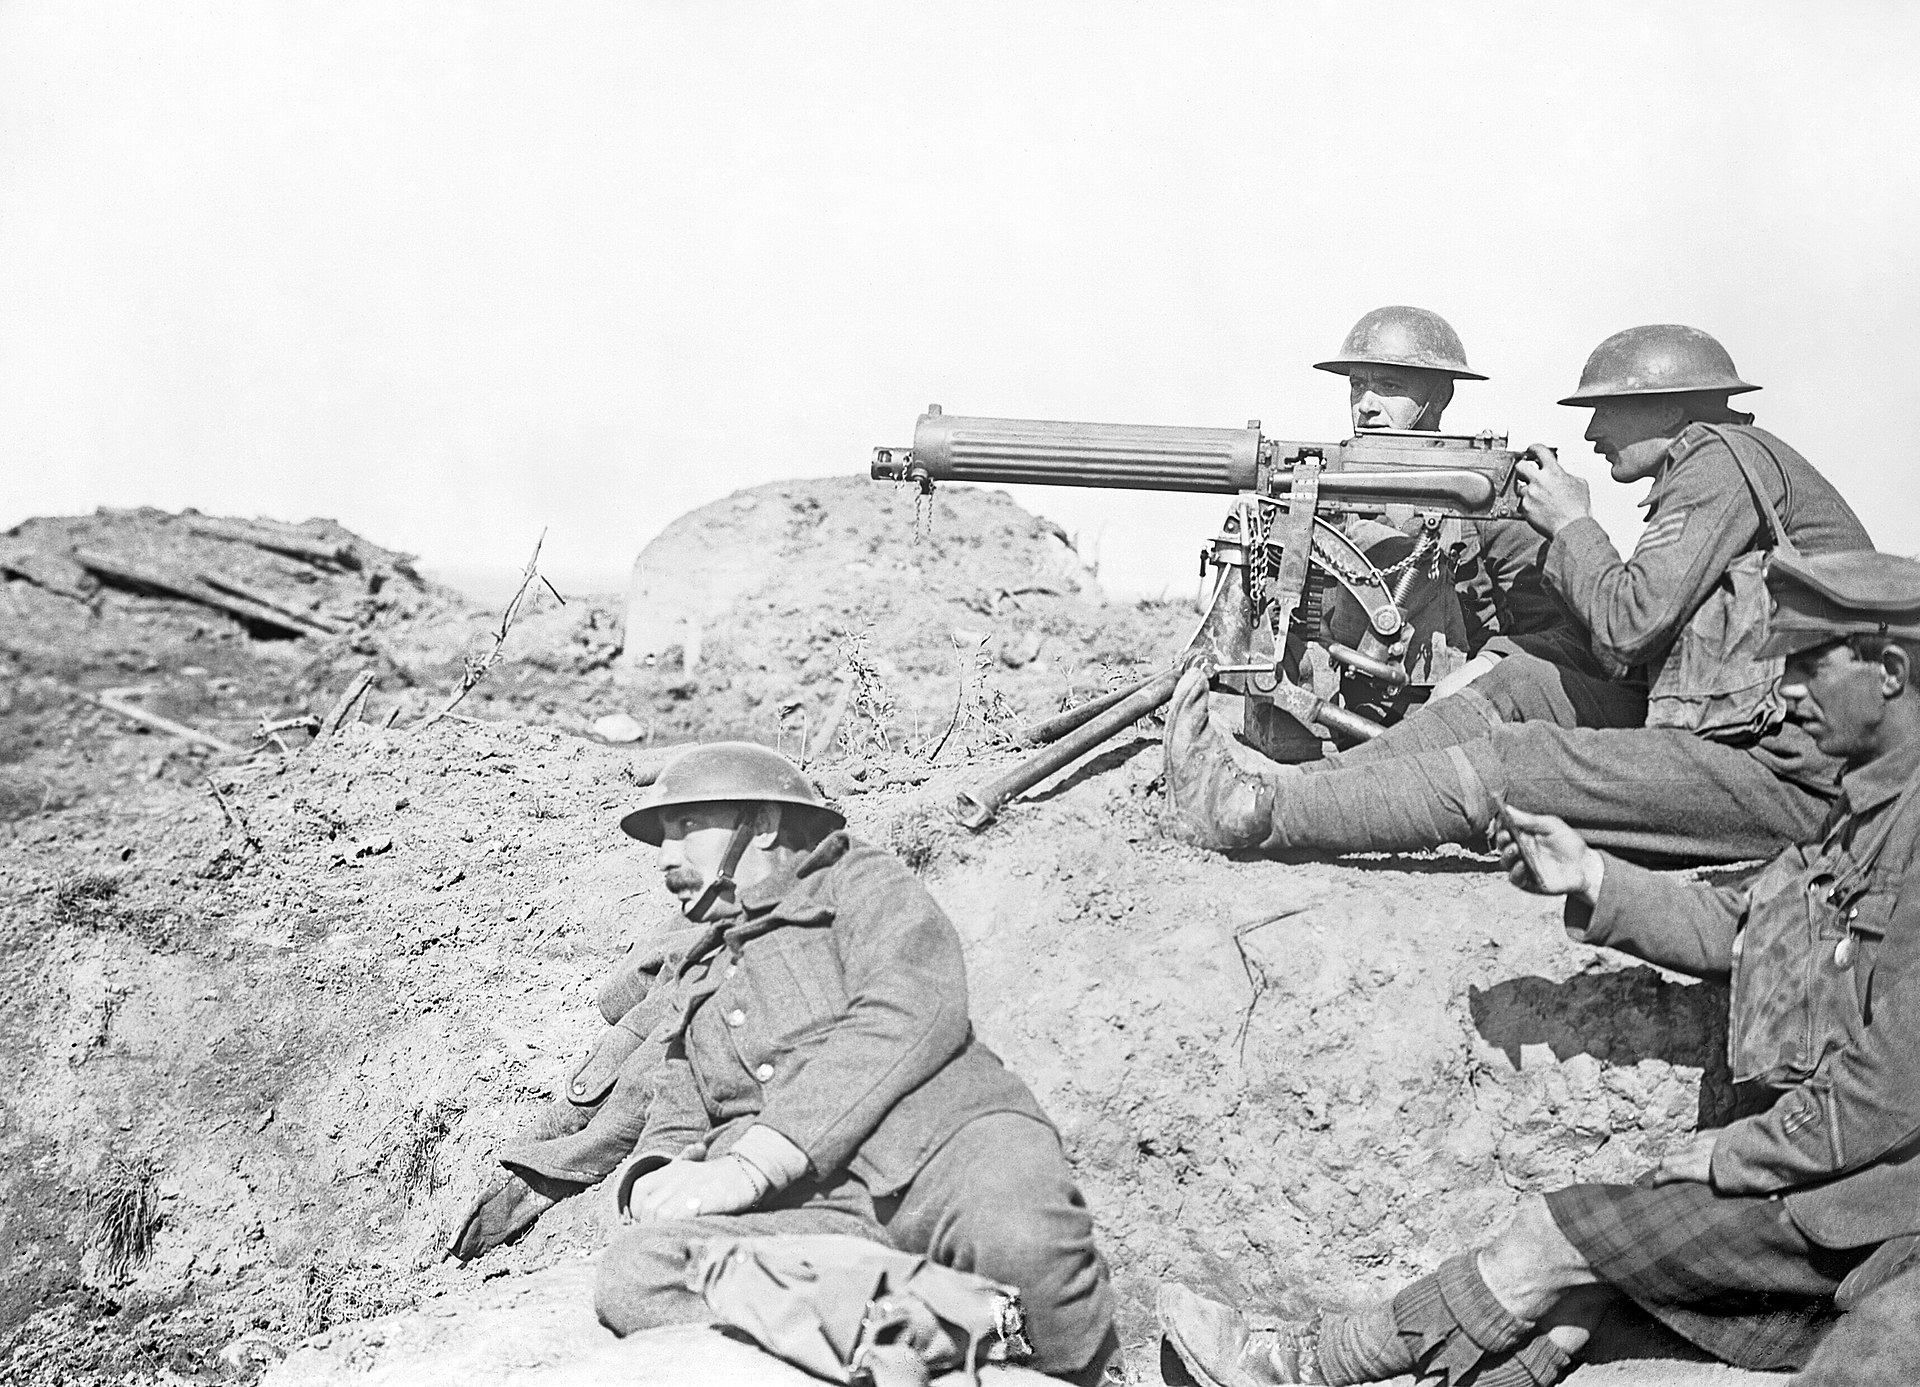 Vickers_machine_gun_in_the_Battle_of_Passchendaele_-_September_1917.jpeg